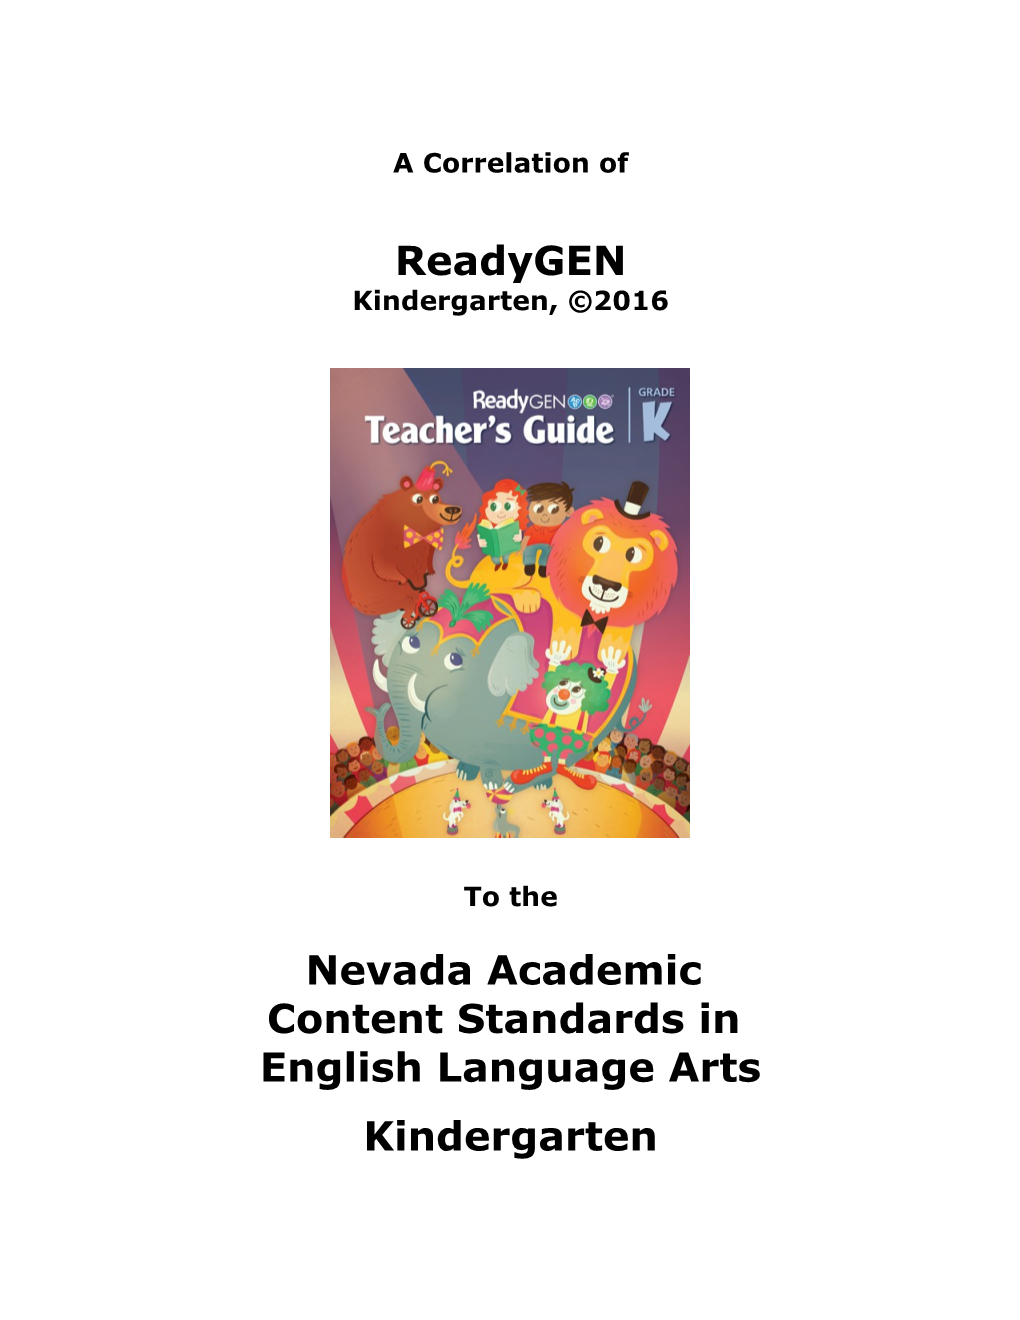 Nevada Academic Content Standards in English Language Arts